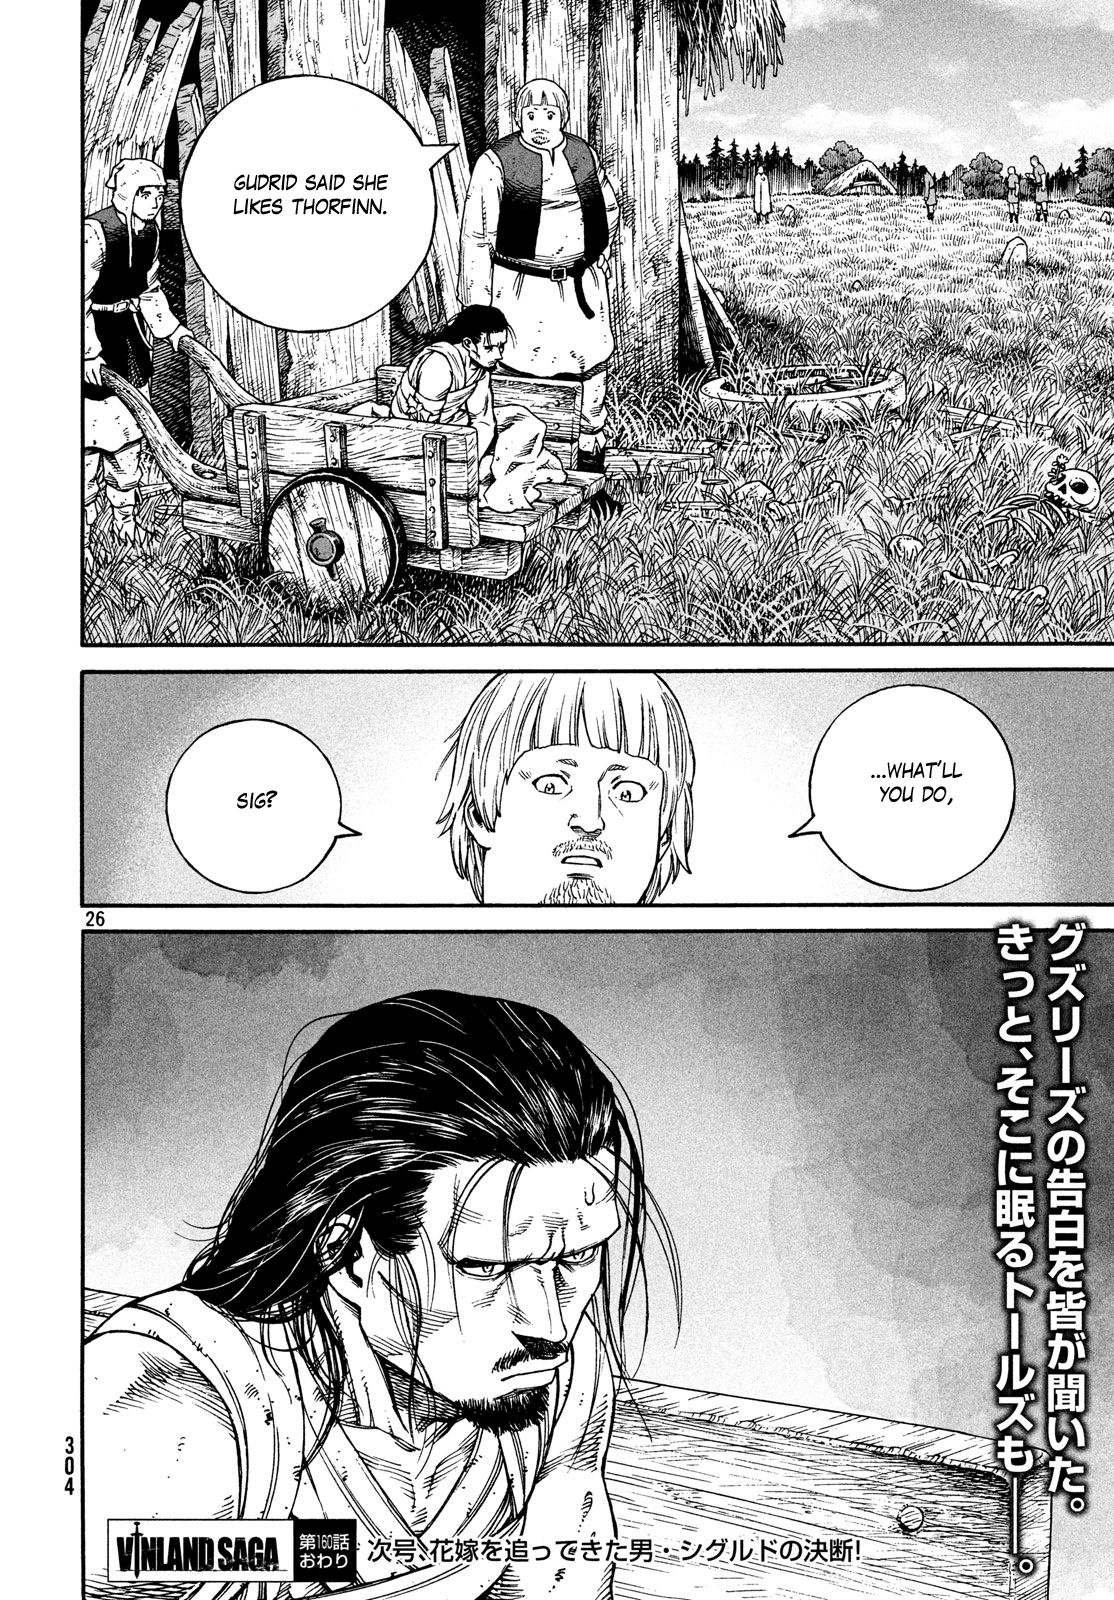 Vinland Saga Manga Manga Chapter - 160 - image 25